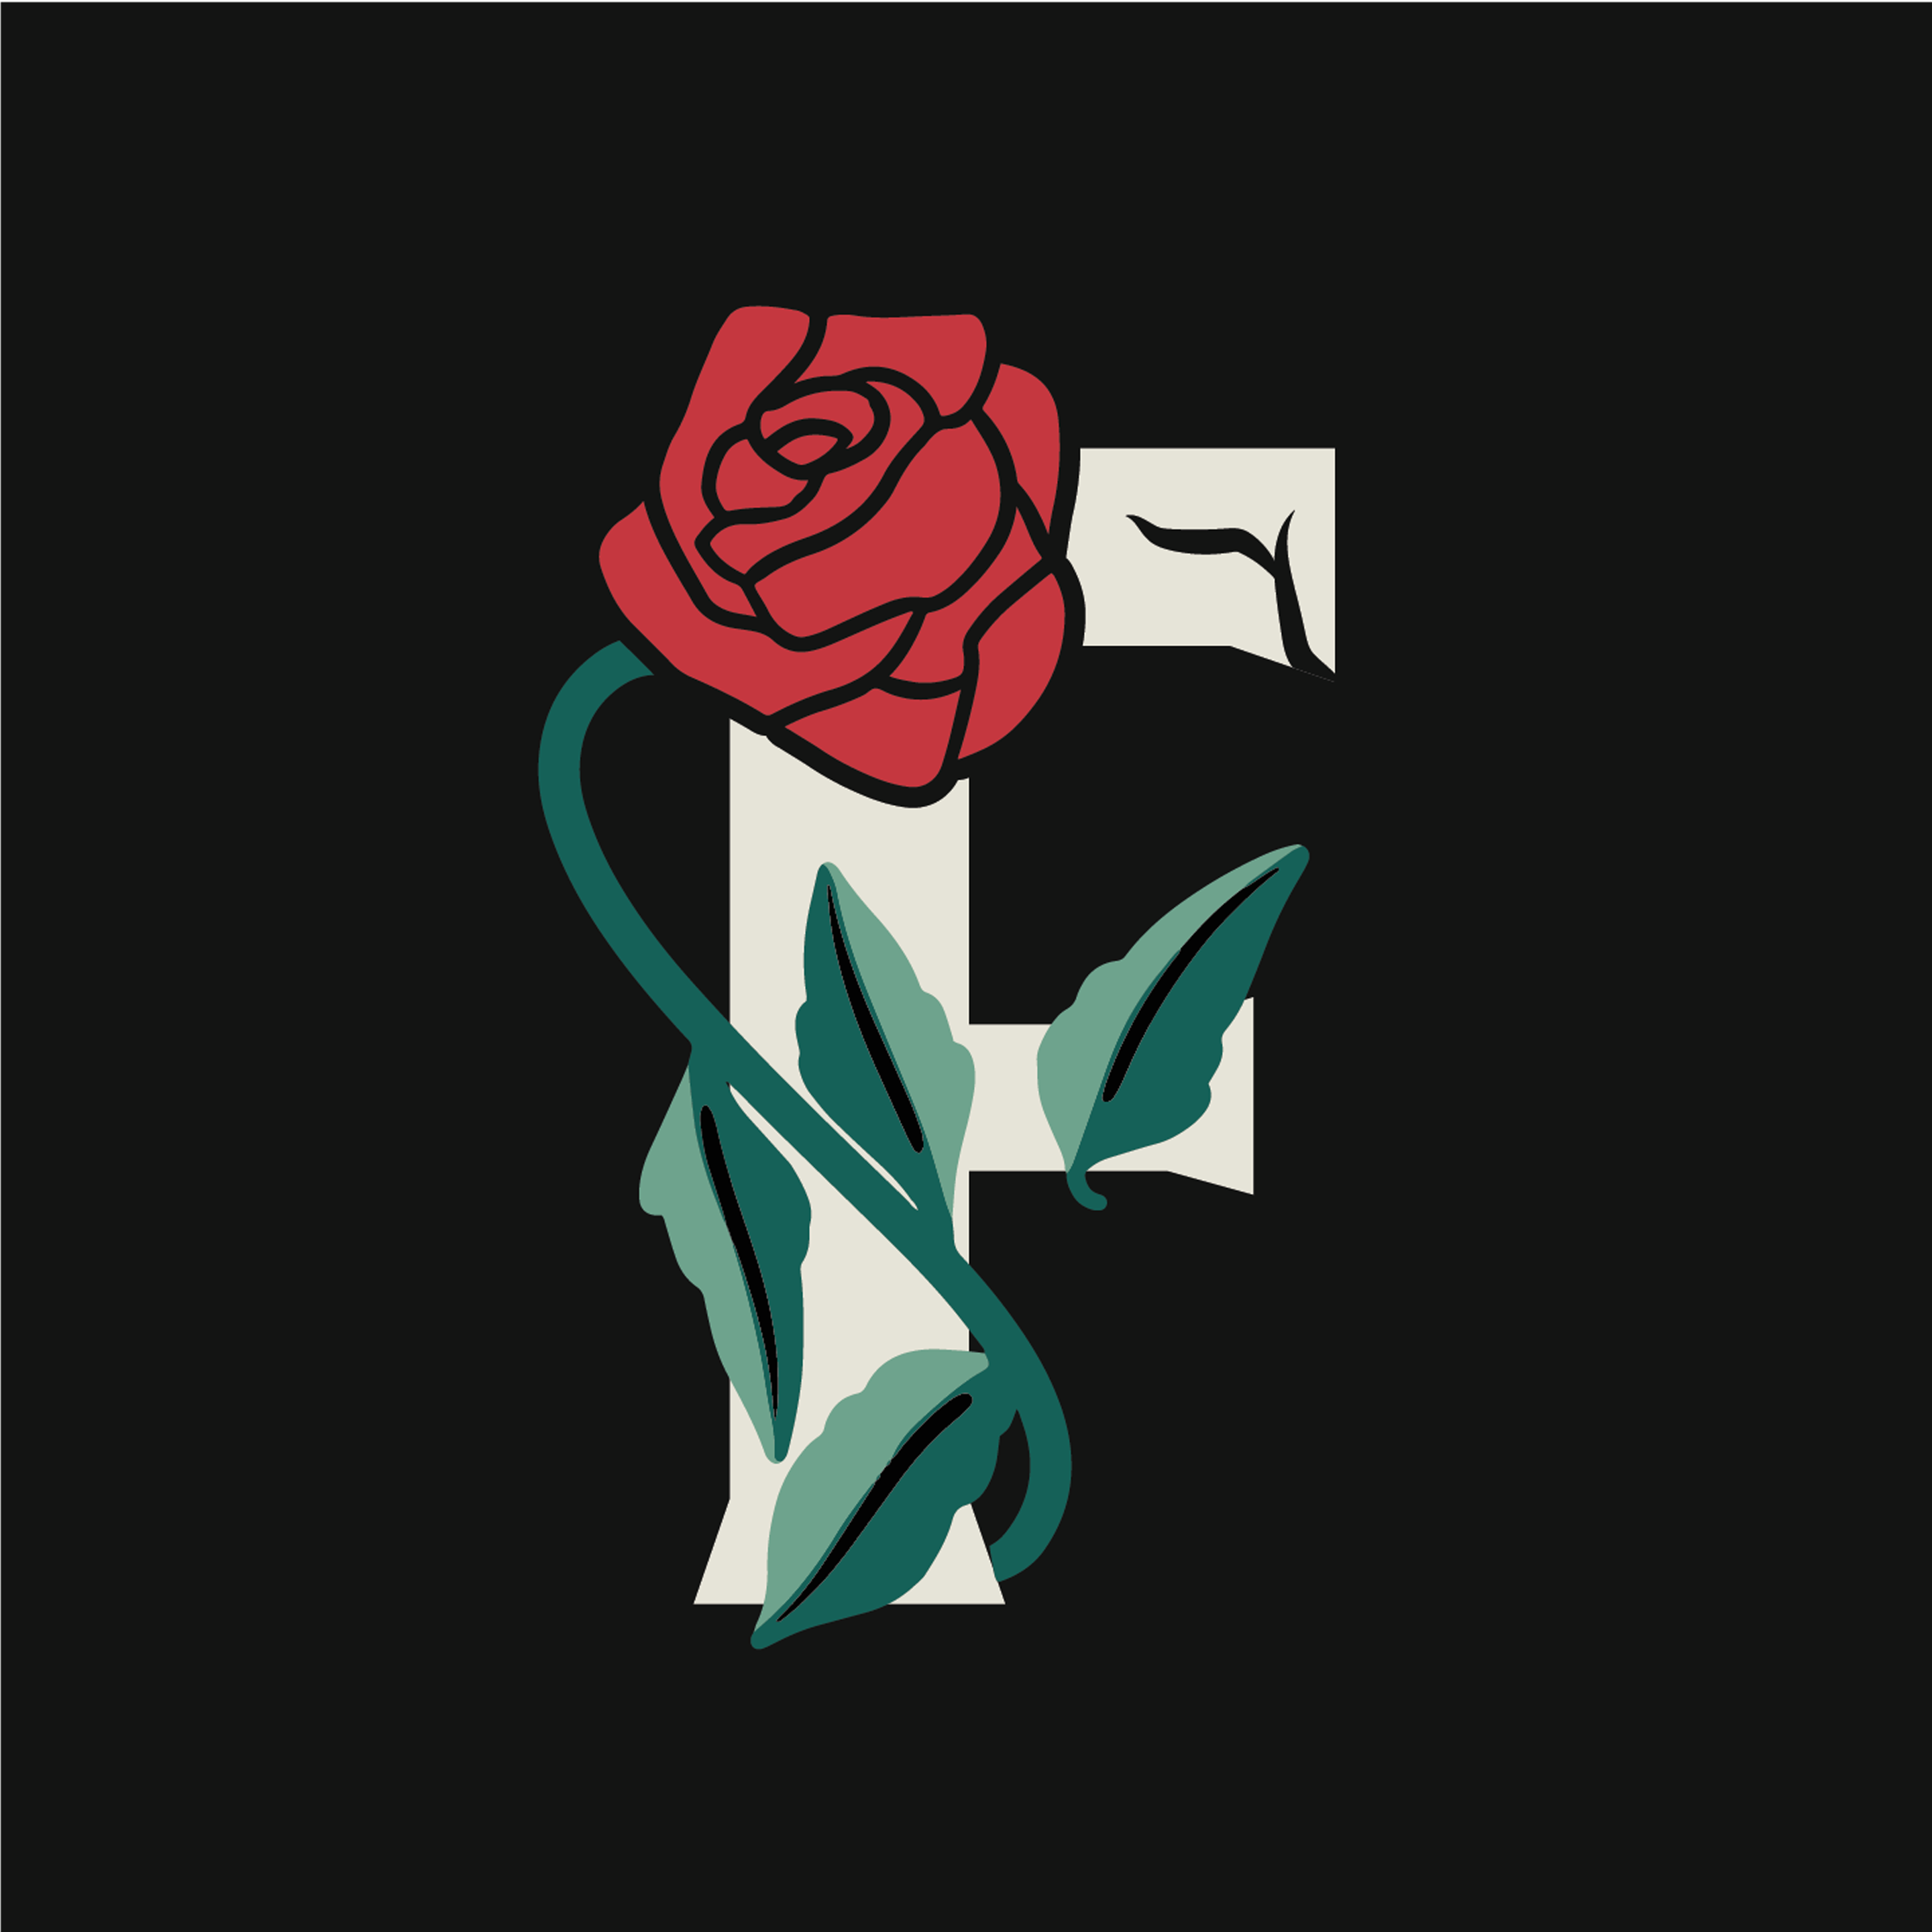 rose-letter-f-design-theme